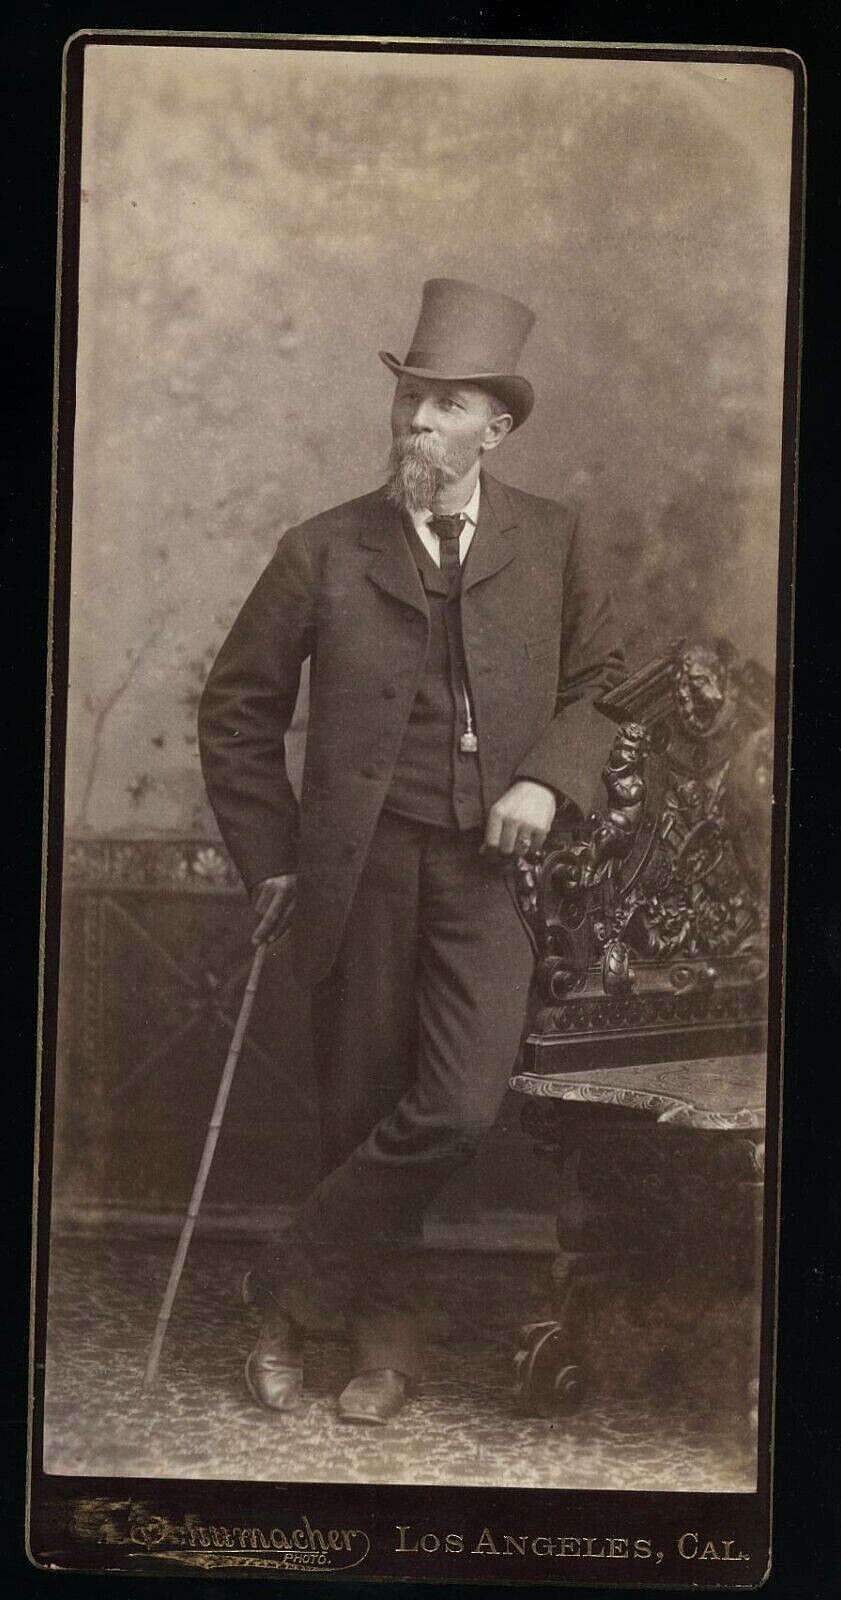 Antique 1880s 1890s Photo of Mr. Karpe, Los Angeles California Photographer